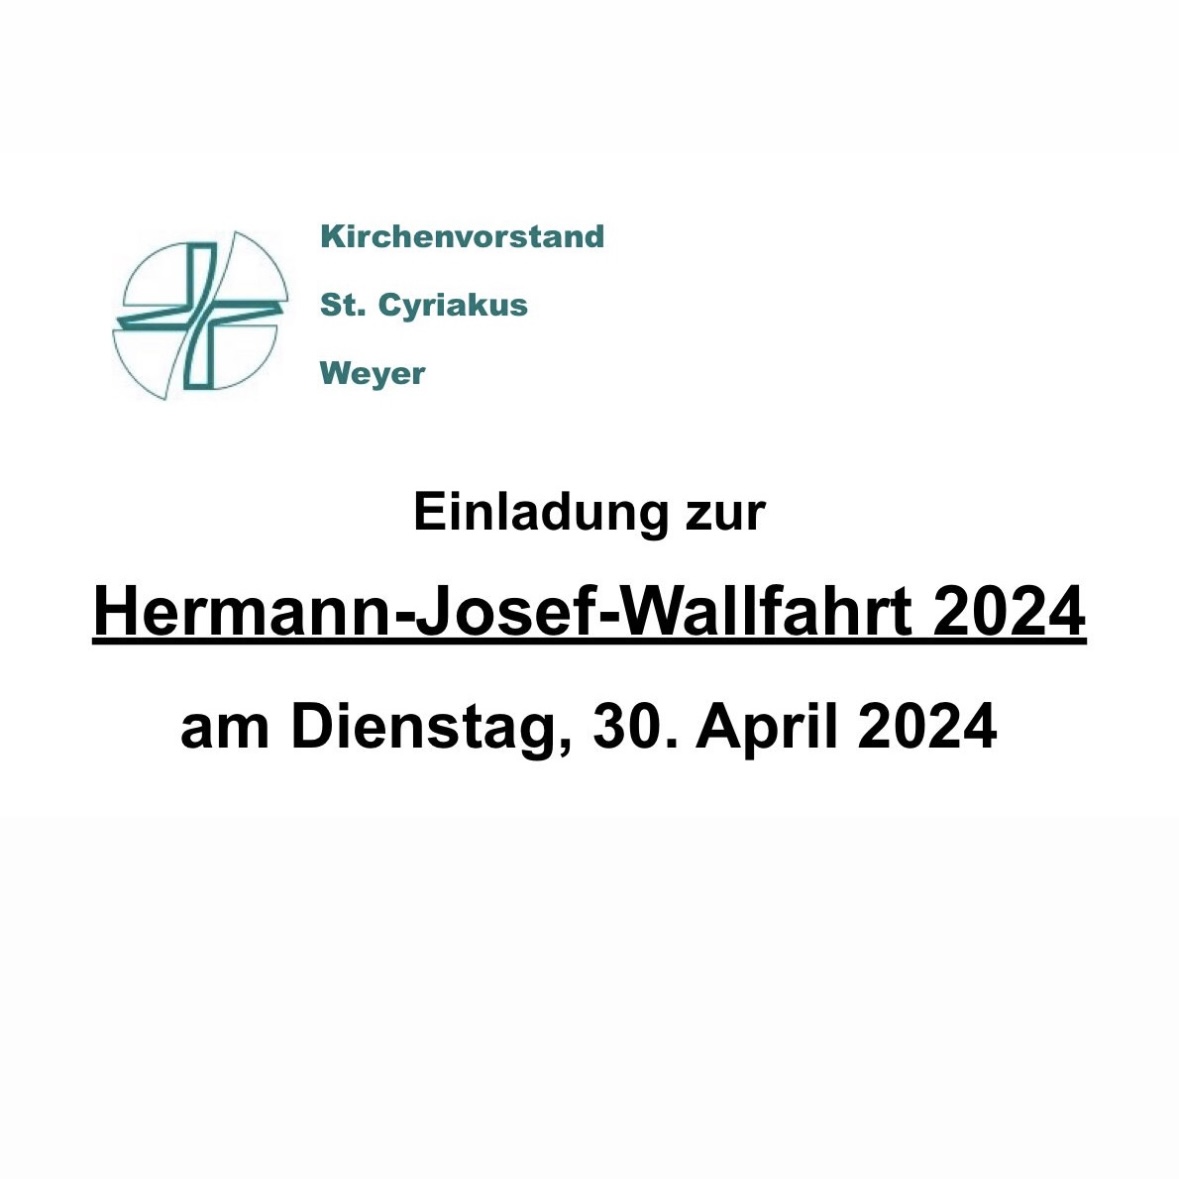 Hermann-Josef-Wallfahrt 2024